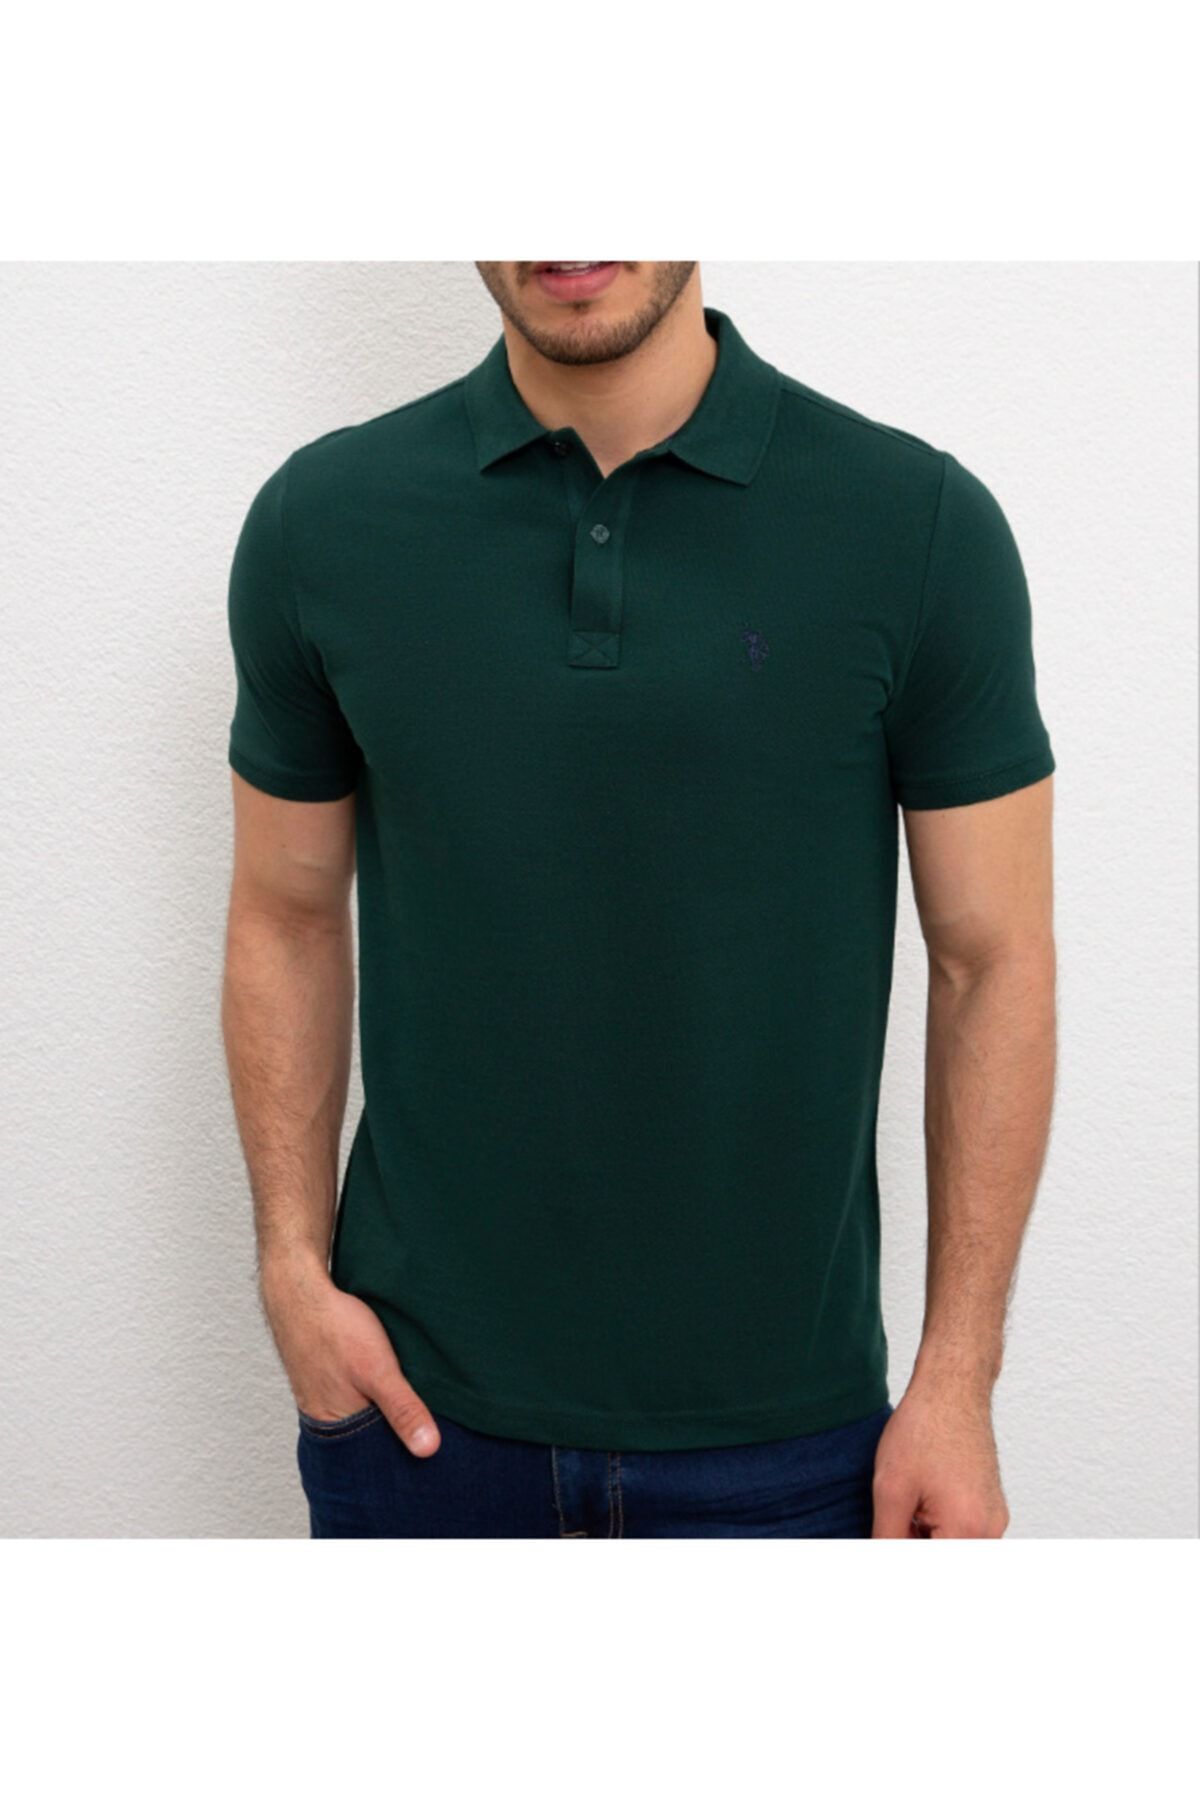 U.S. Polo Assn. Erkek Yeşil Polo Yaka T-shirt G081gl011.000.954055